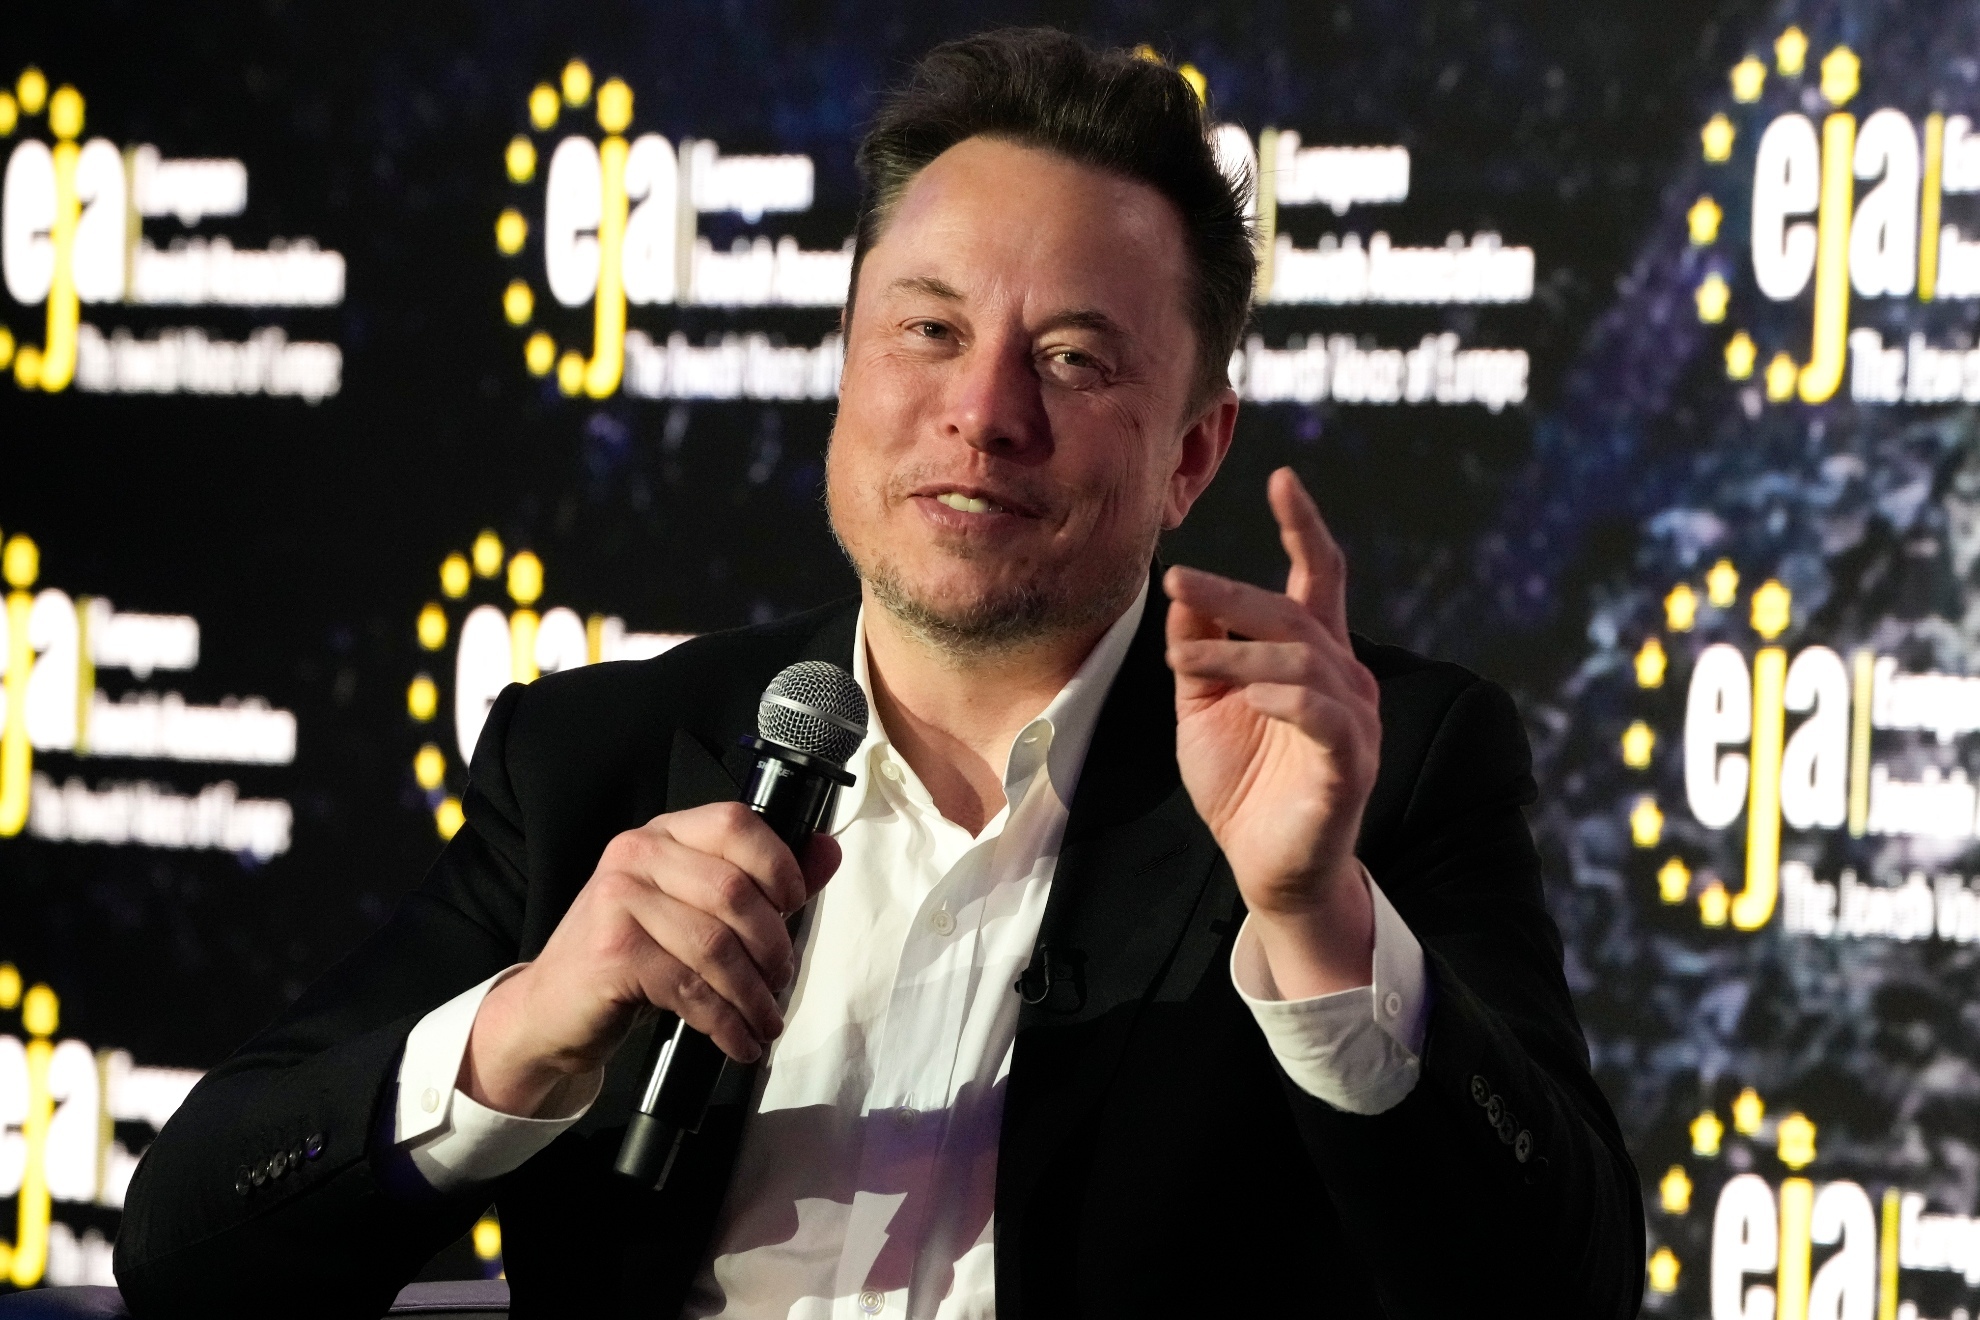 Elon Musk at a public event.